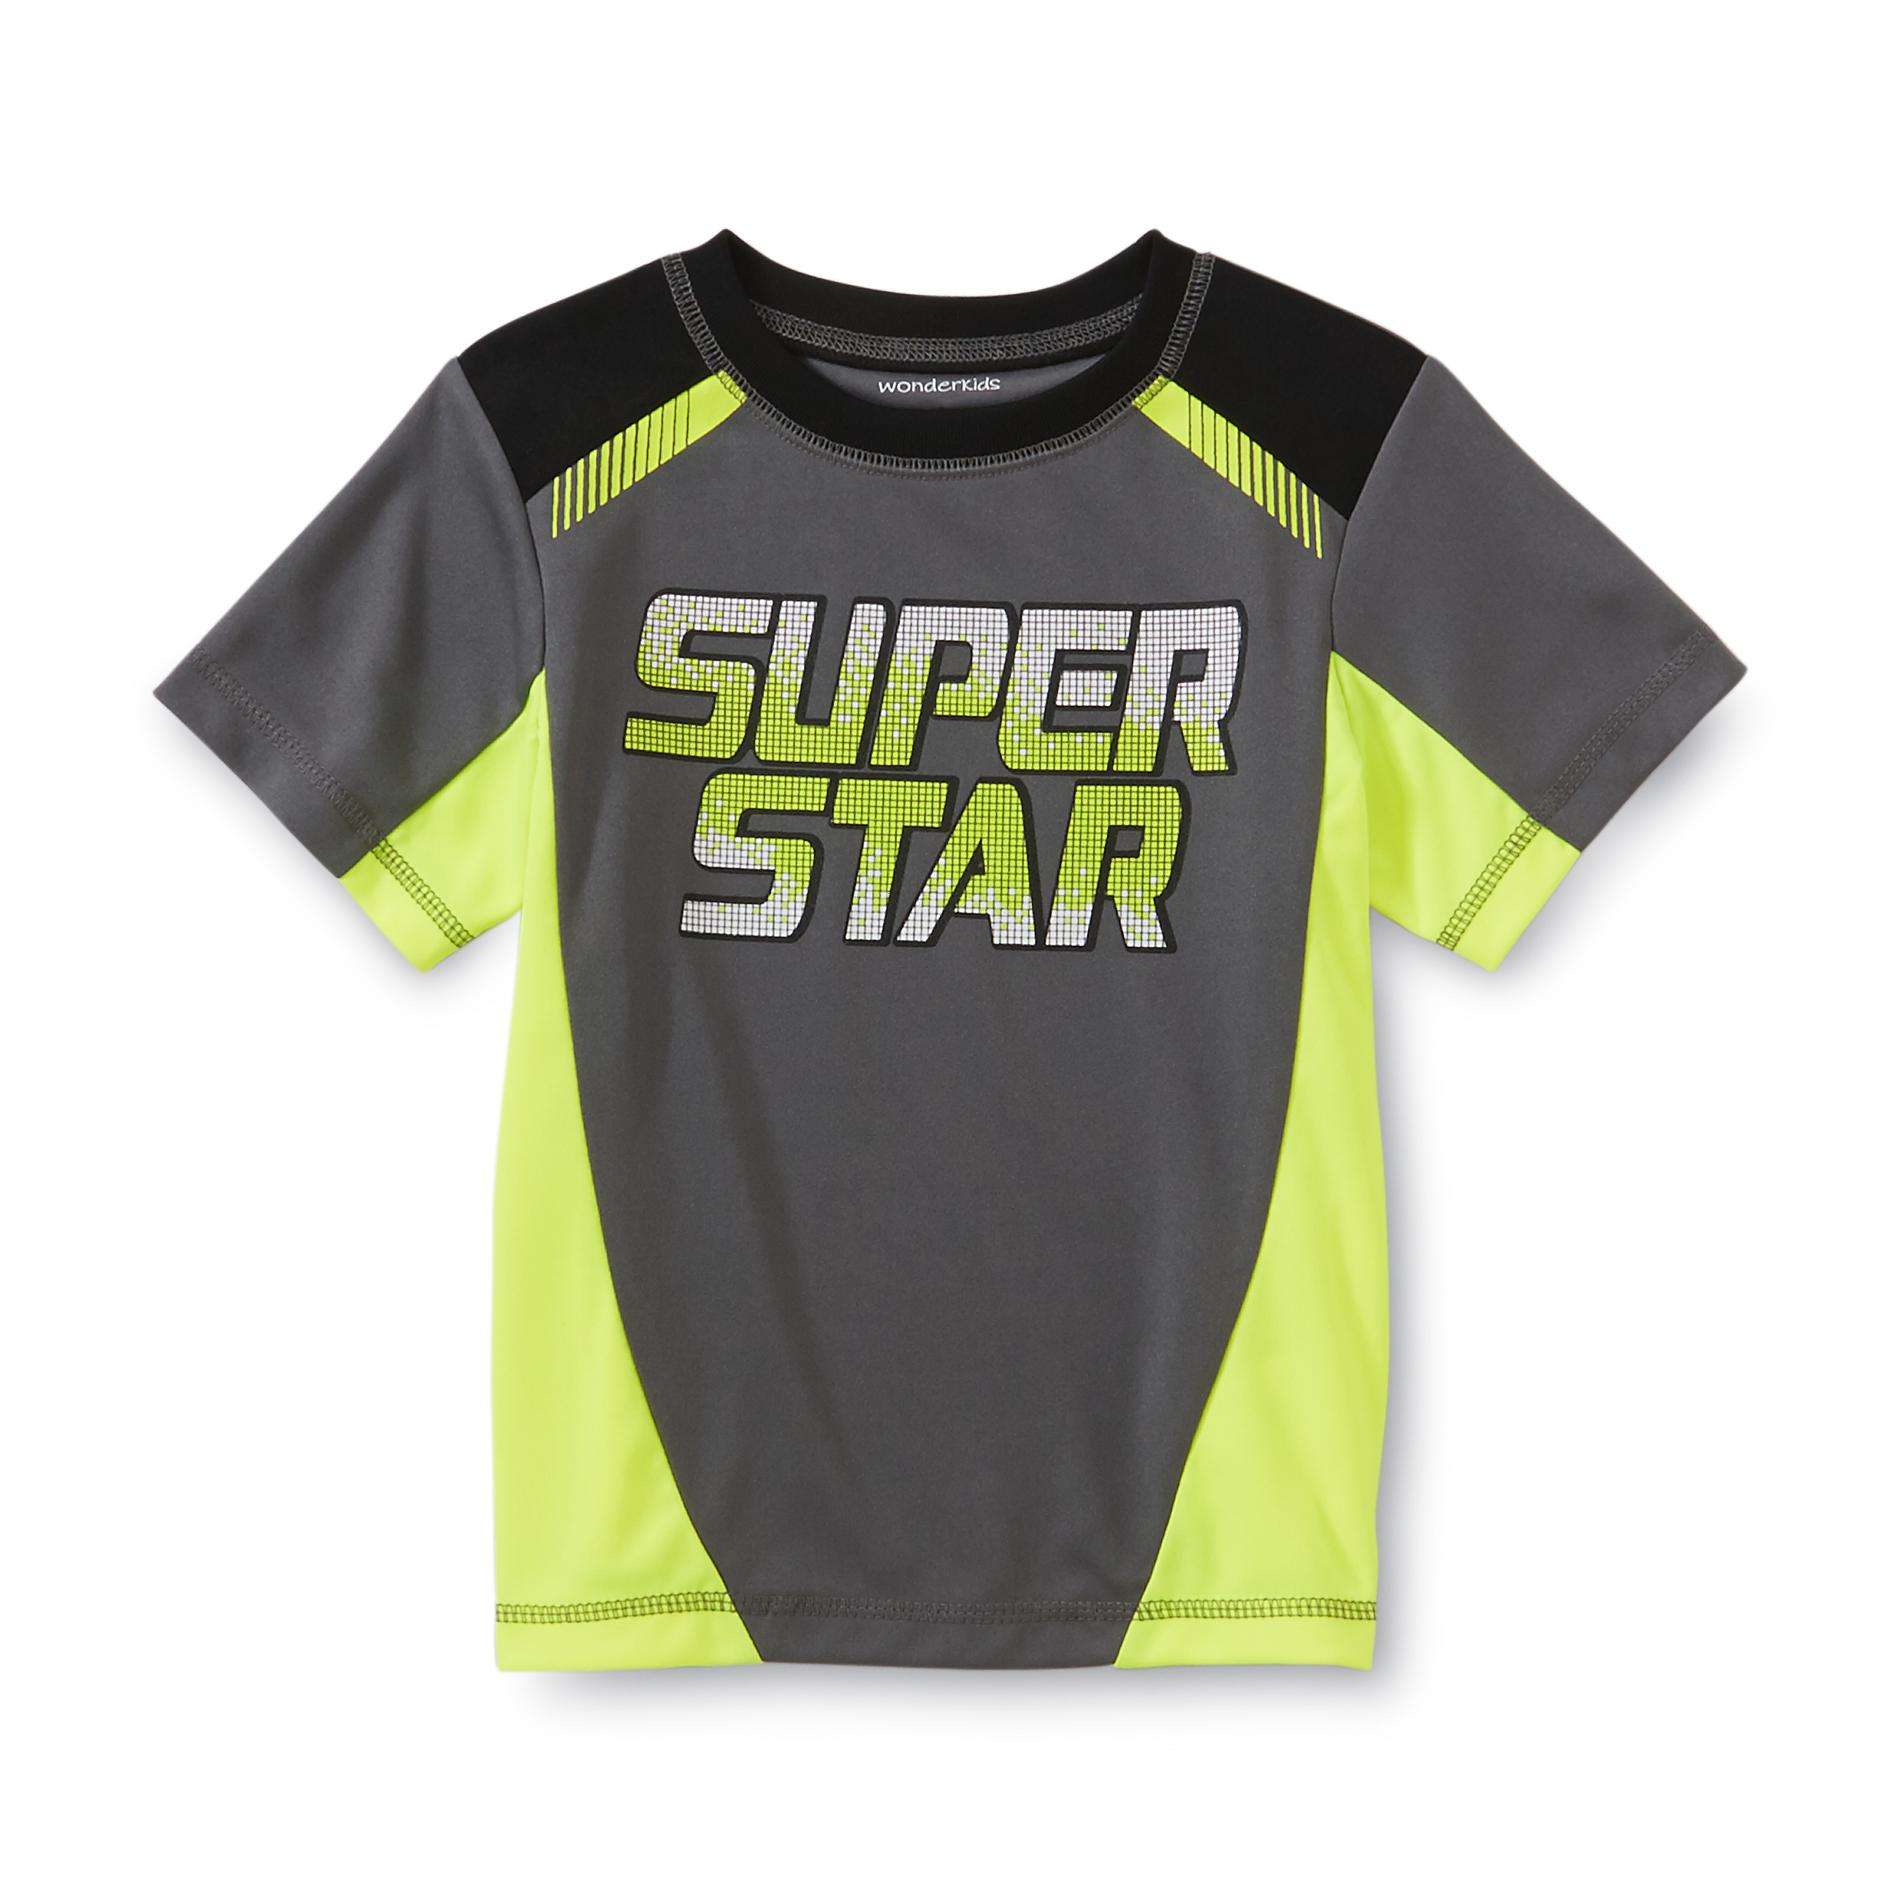 WonderKids Toddler Boy's Graphic Athletic T-Shirt - Colorblock